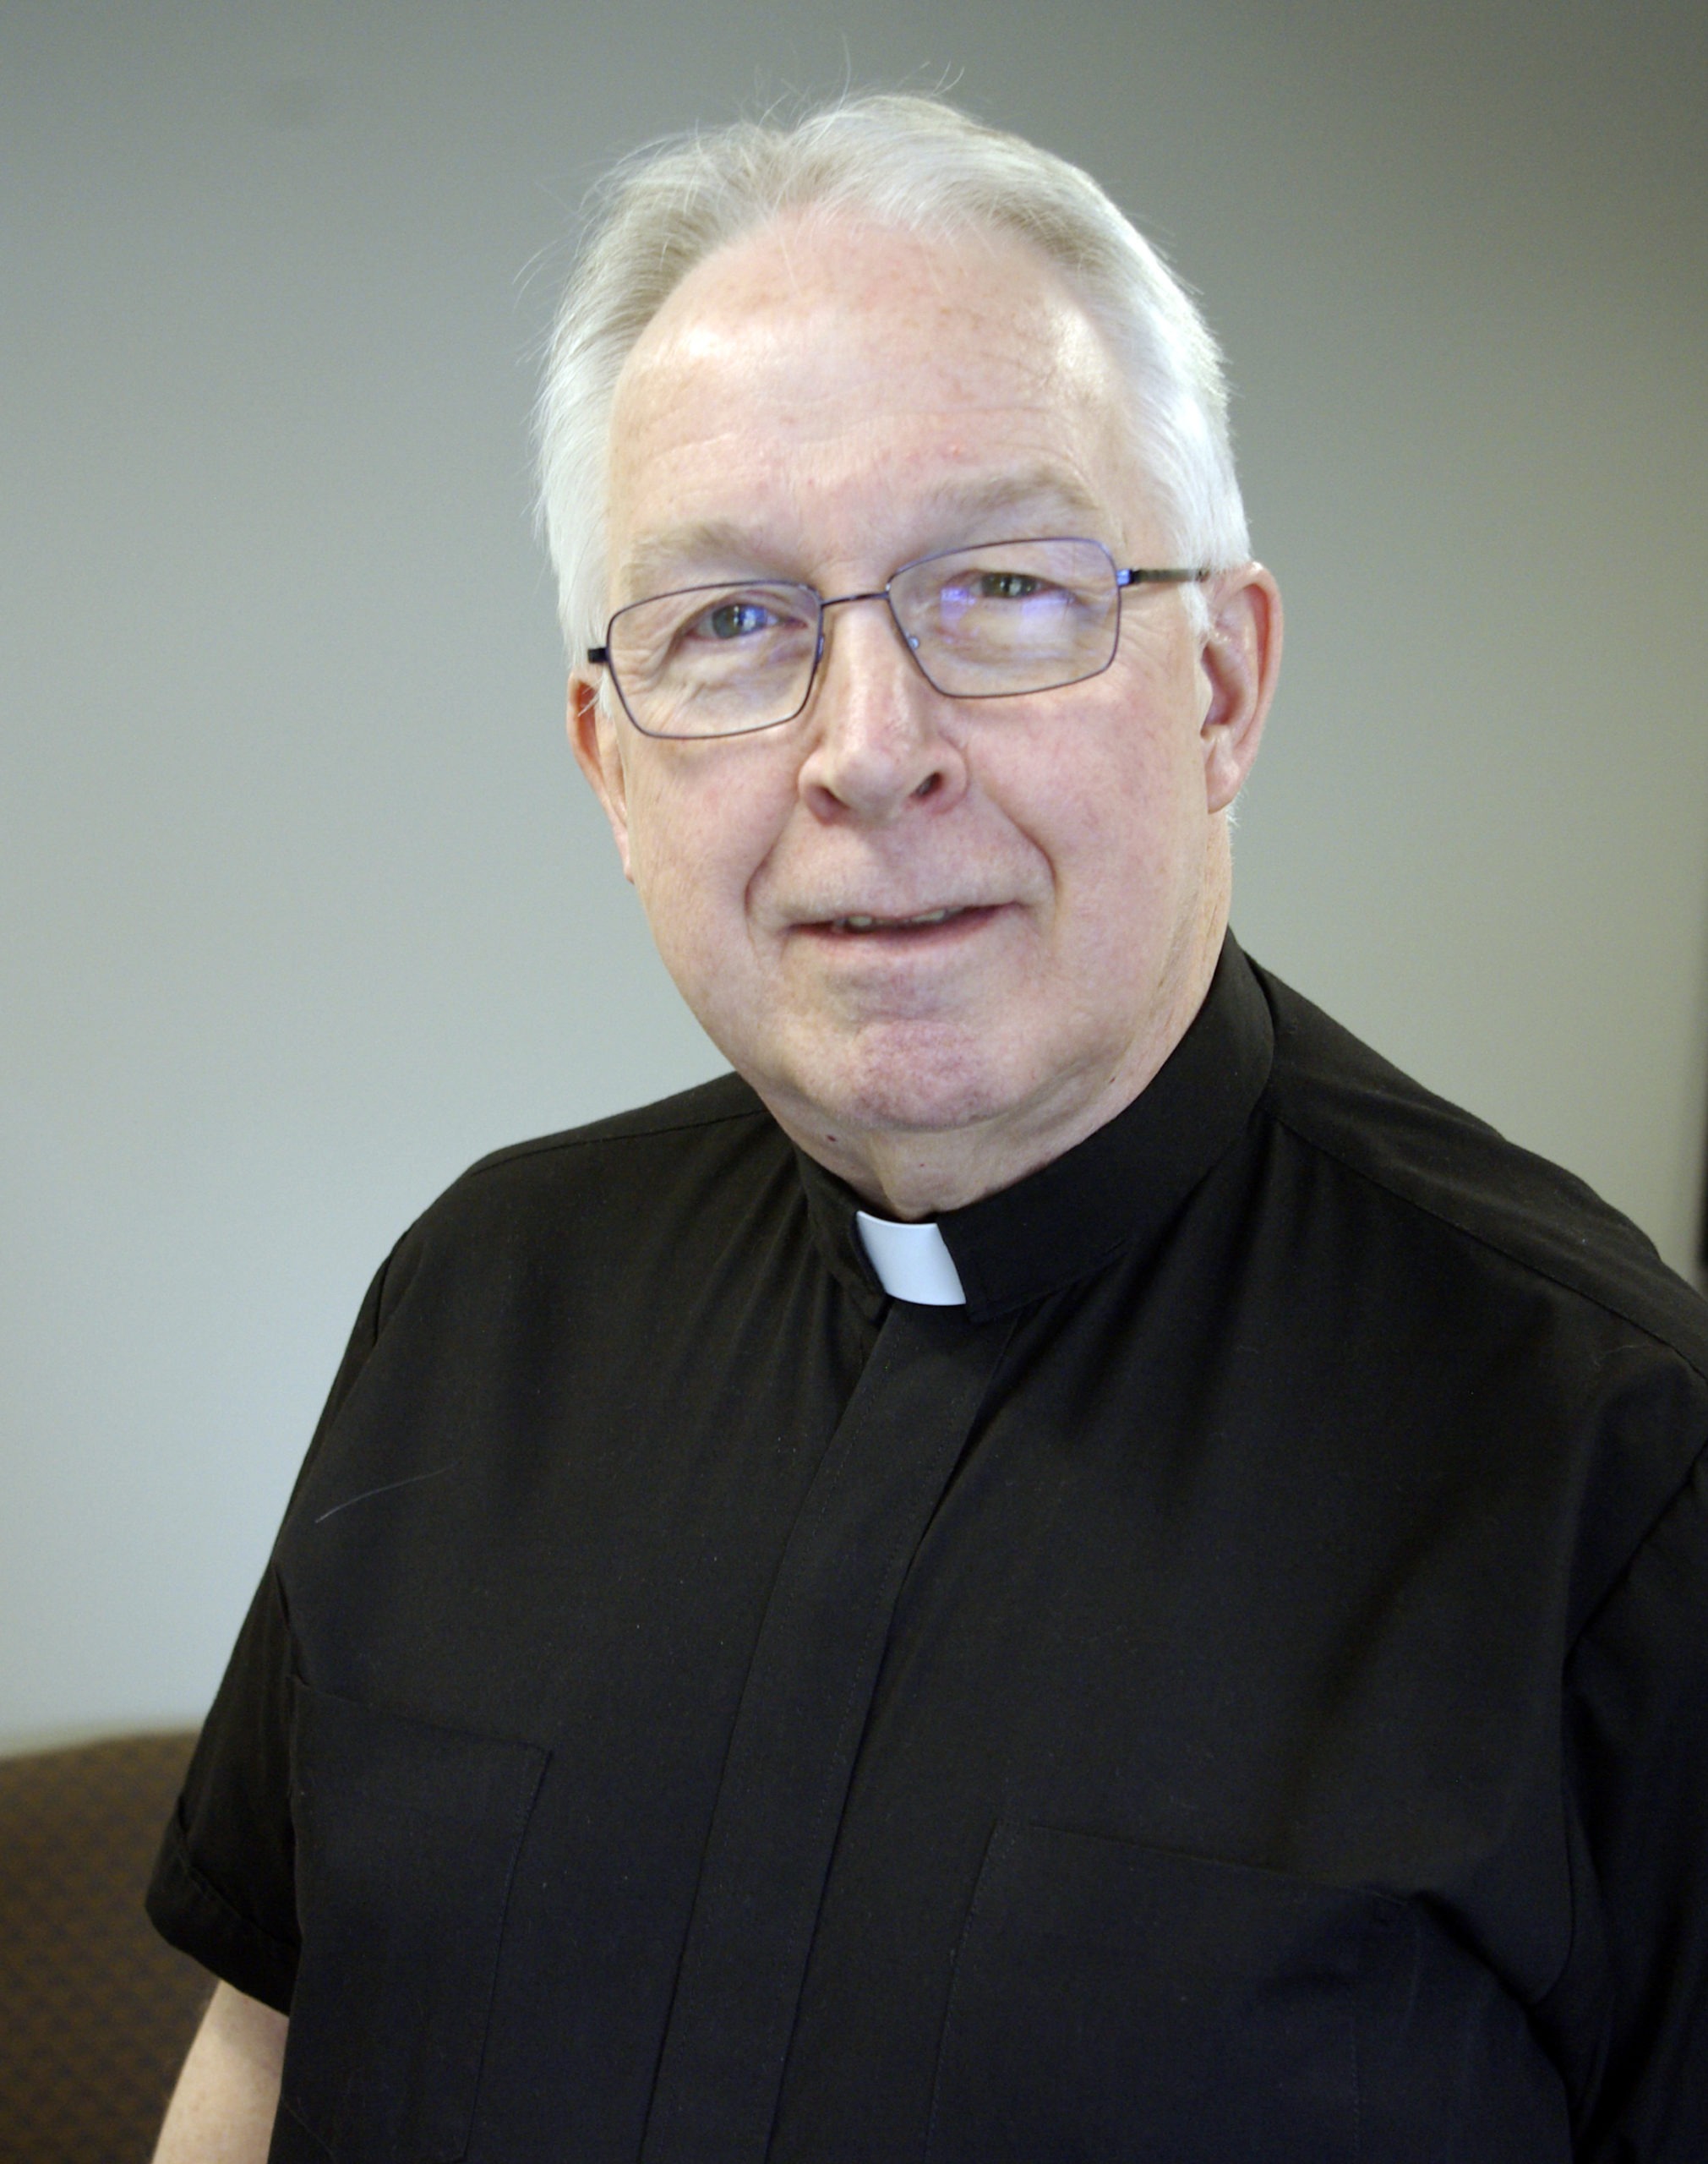 Fr. Tom Esselman, C.M.